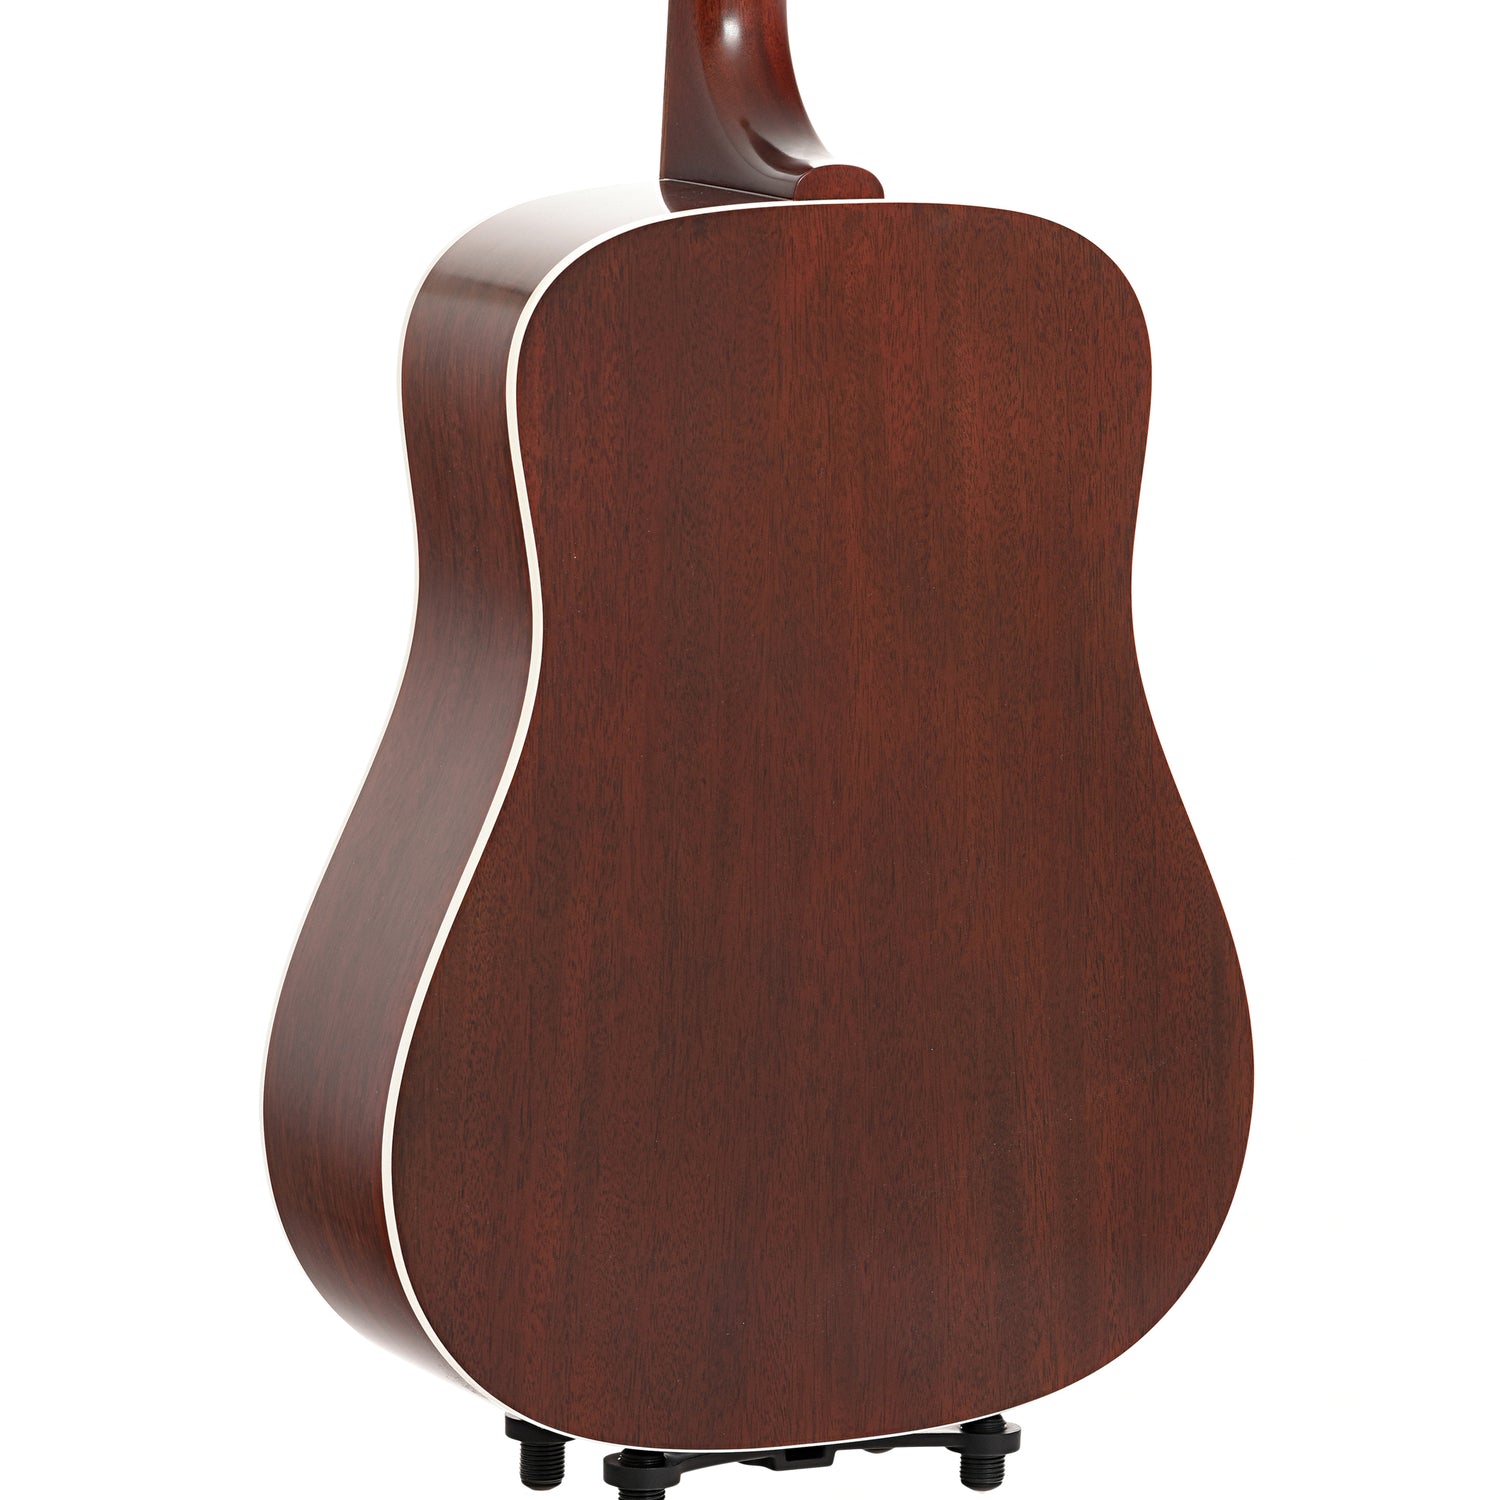 Back and side of Guild D-40 Standard Acoustic Guitar, Natural